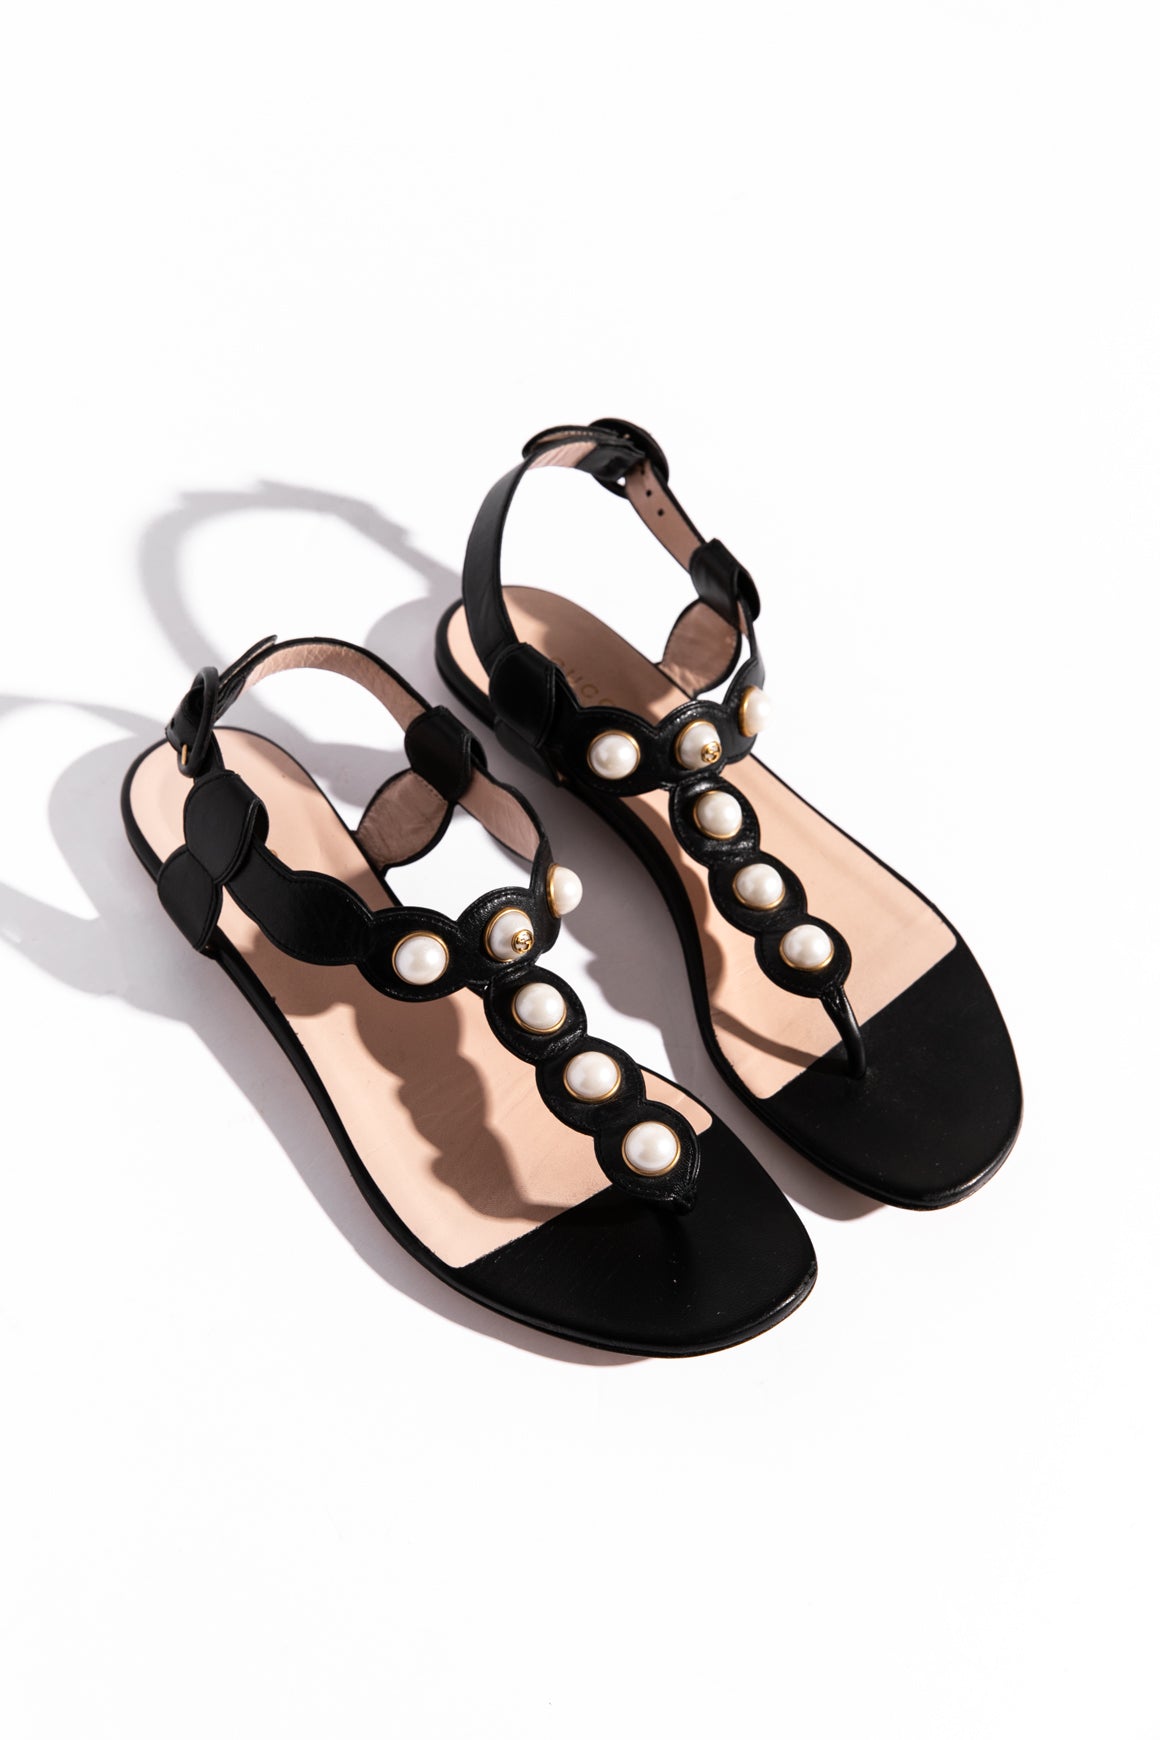 GUCCI Black Scallop Pearl Sandals (Sz. 37)